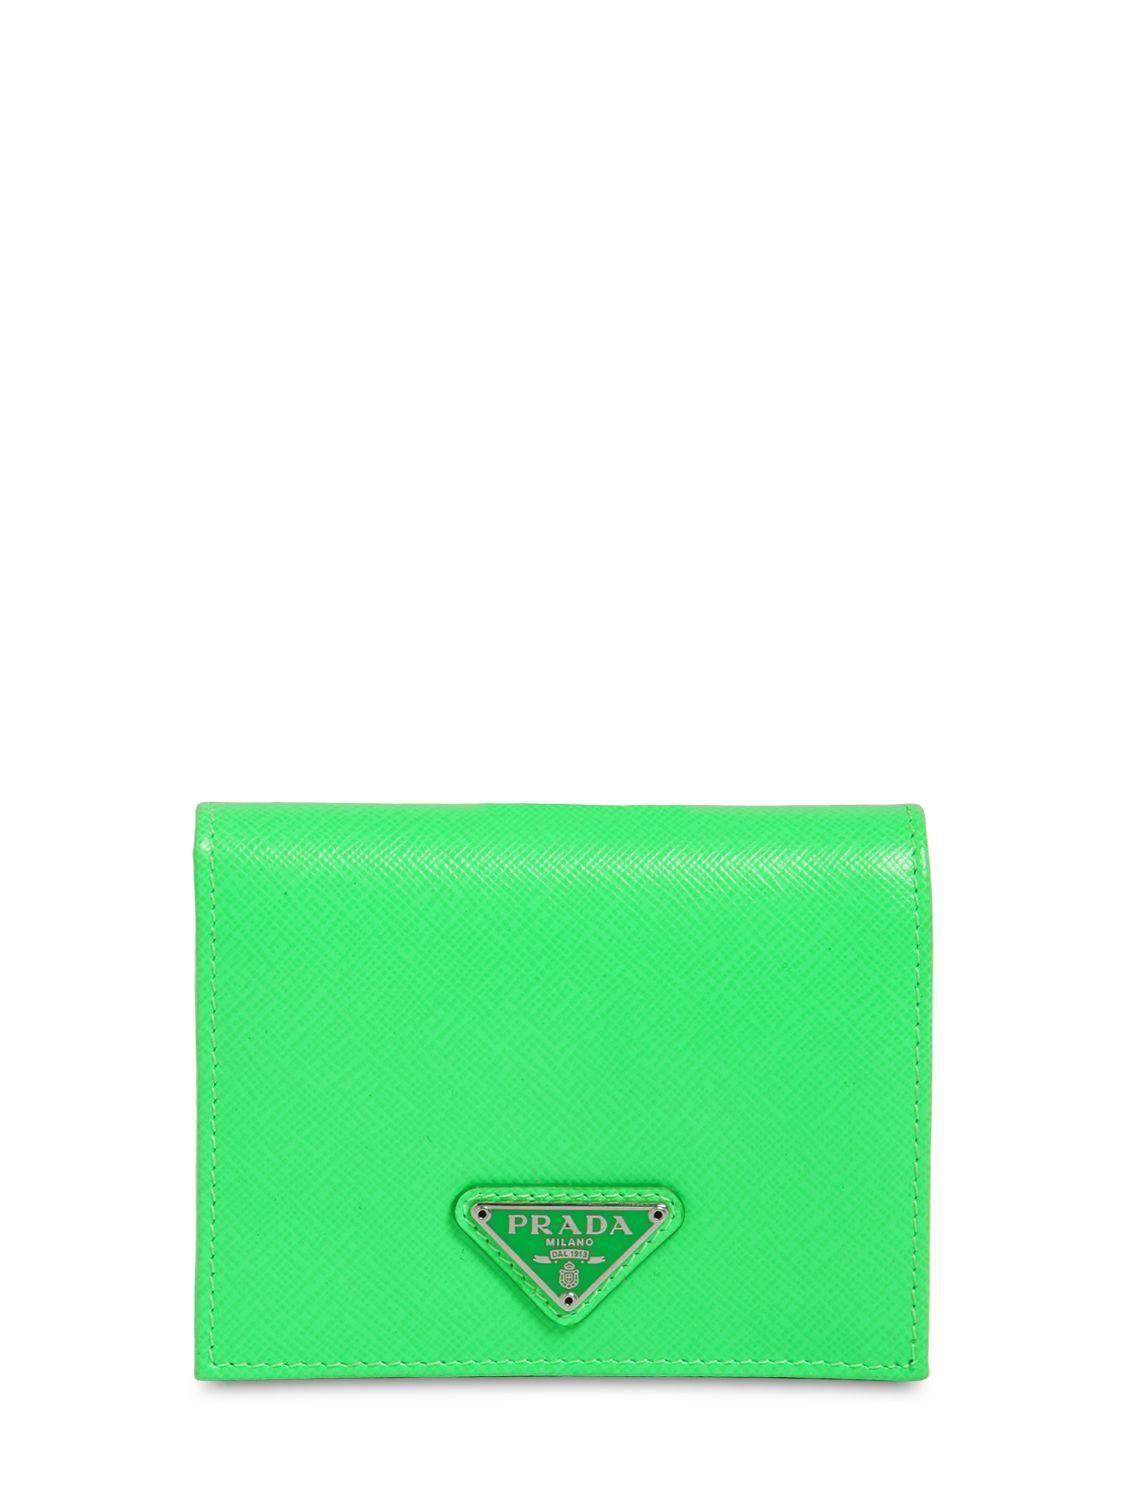 Green Triangle Logo - Prada Triangle Logo Saffiano Small Wallet in Green - Lyst